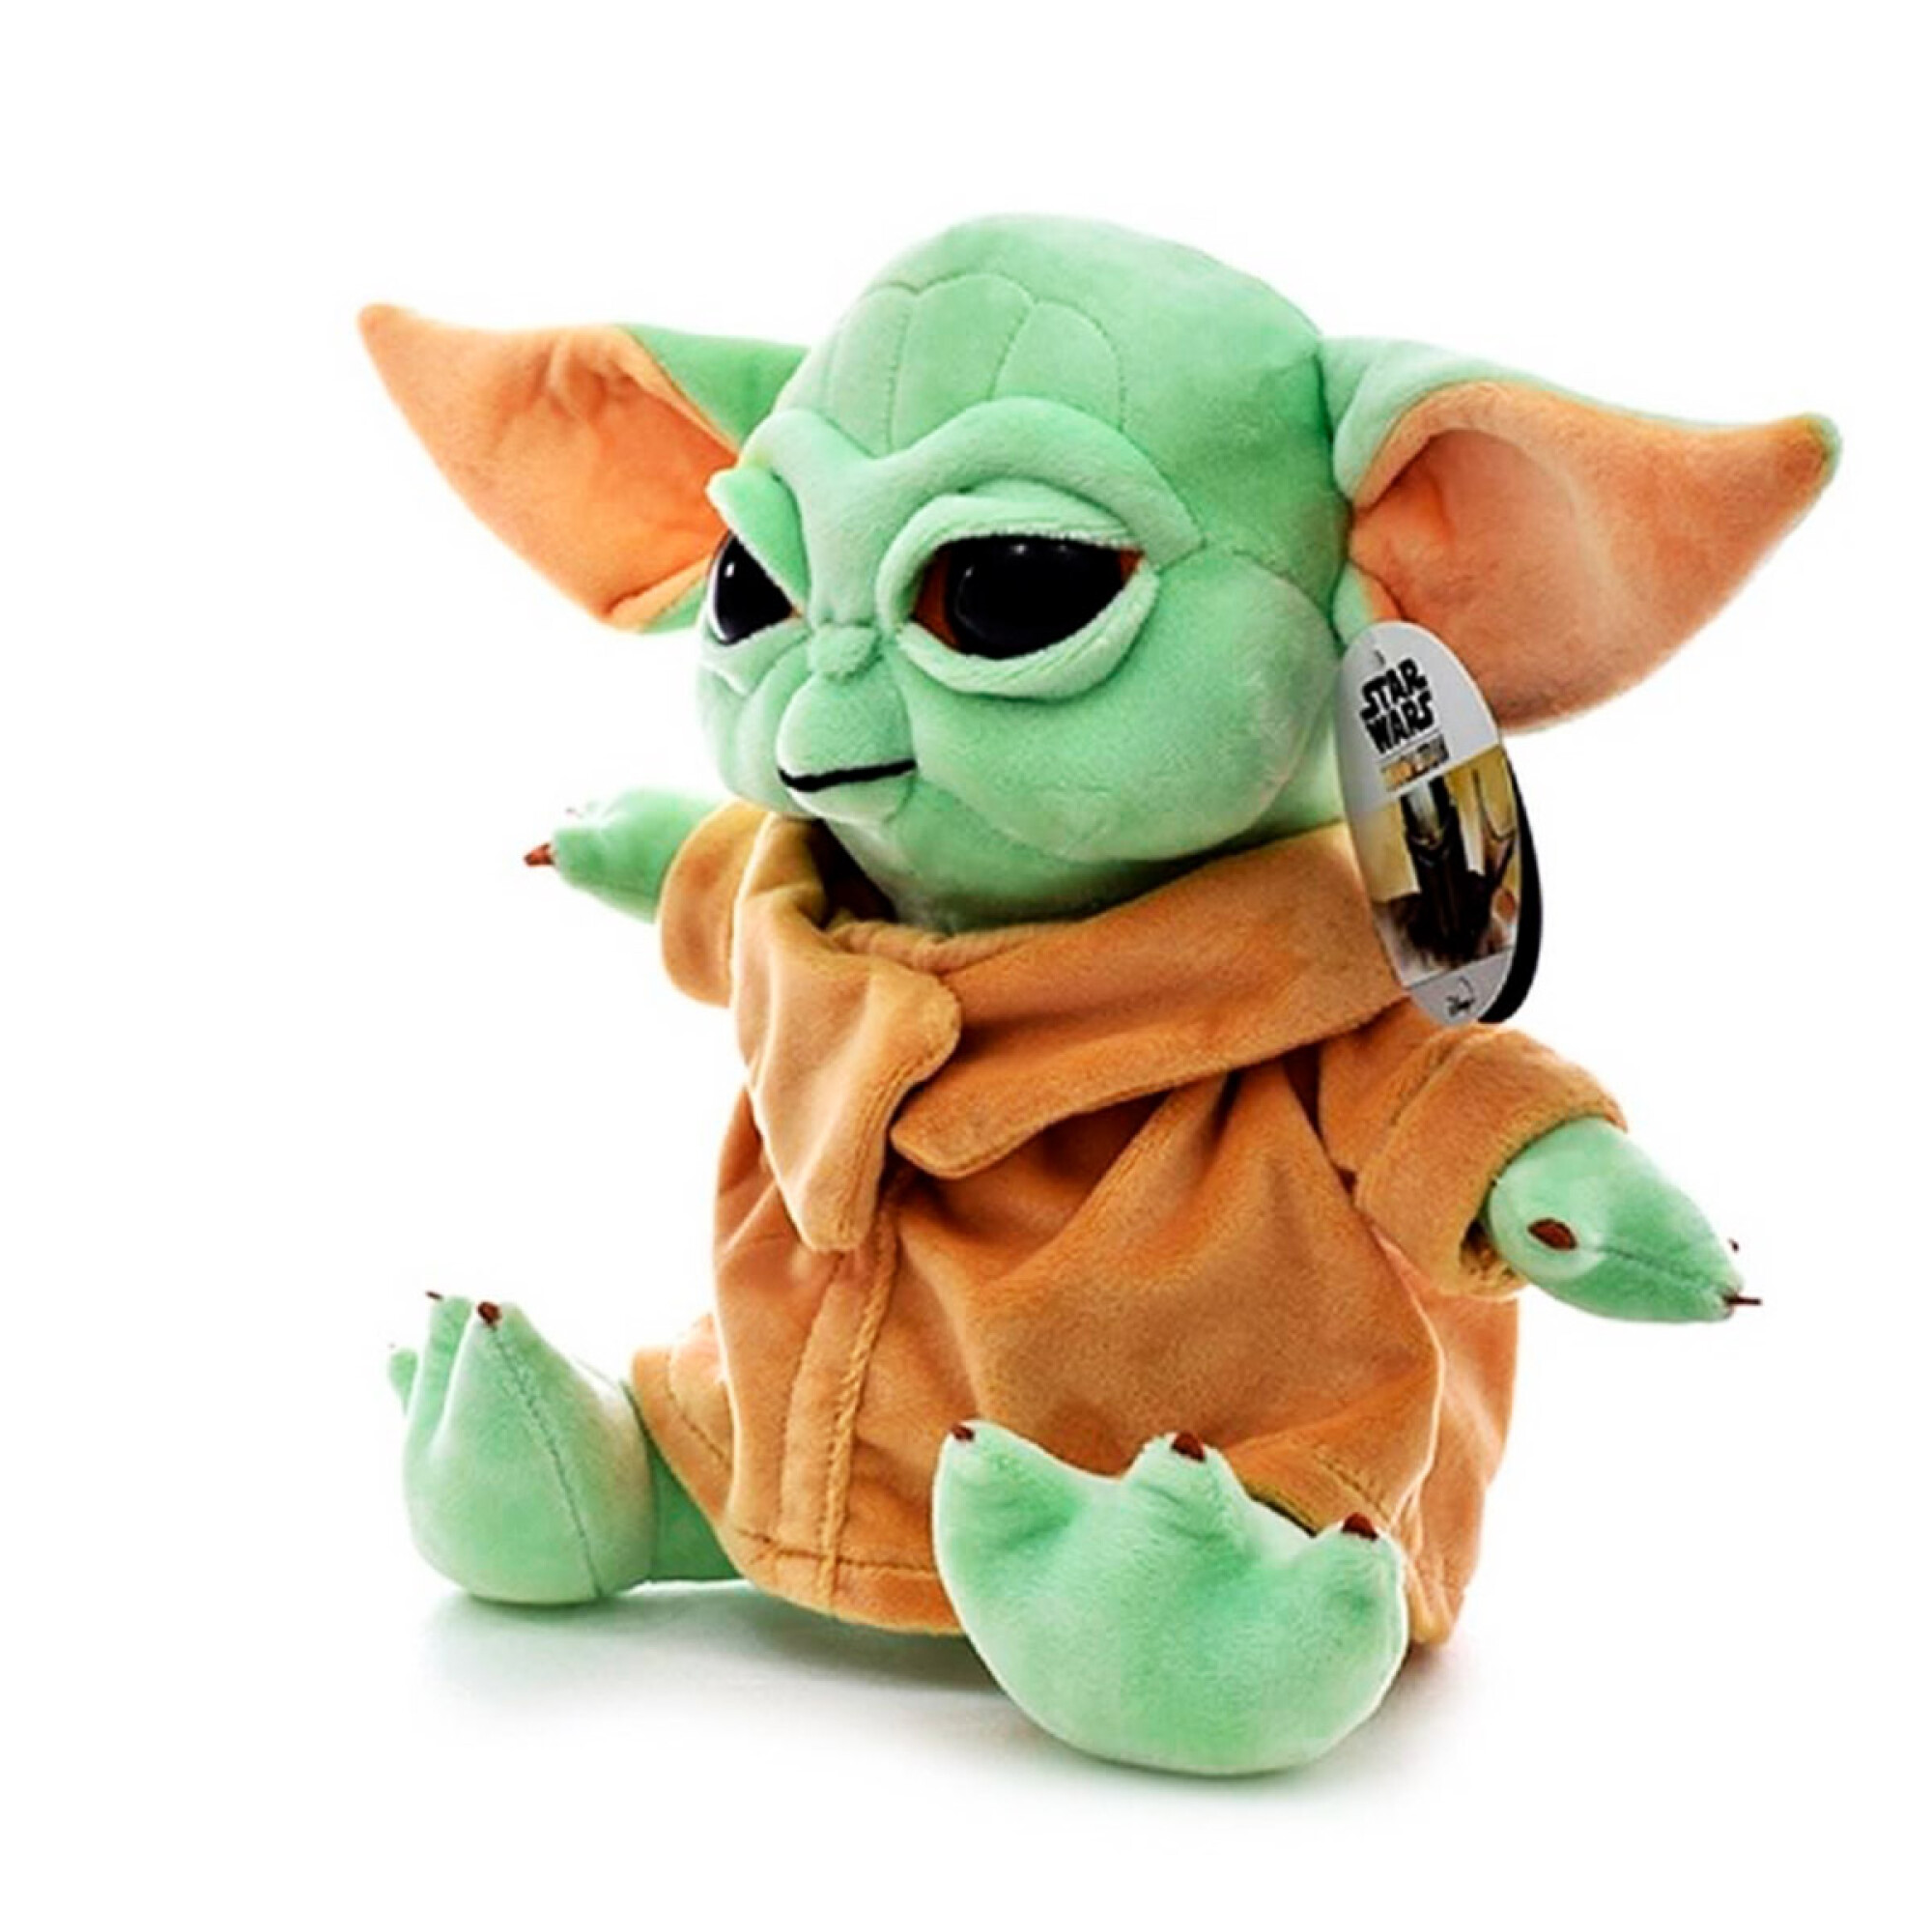 Star Wars Peluche Baby Yoda 40cm Mandalorian Grogu — El Rey del